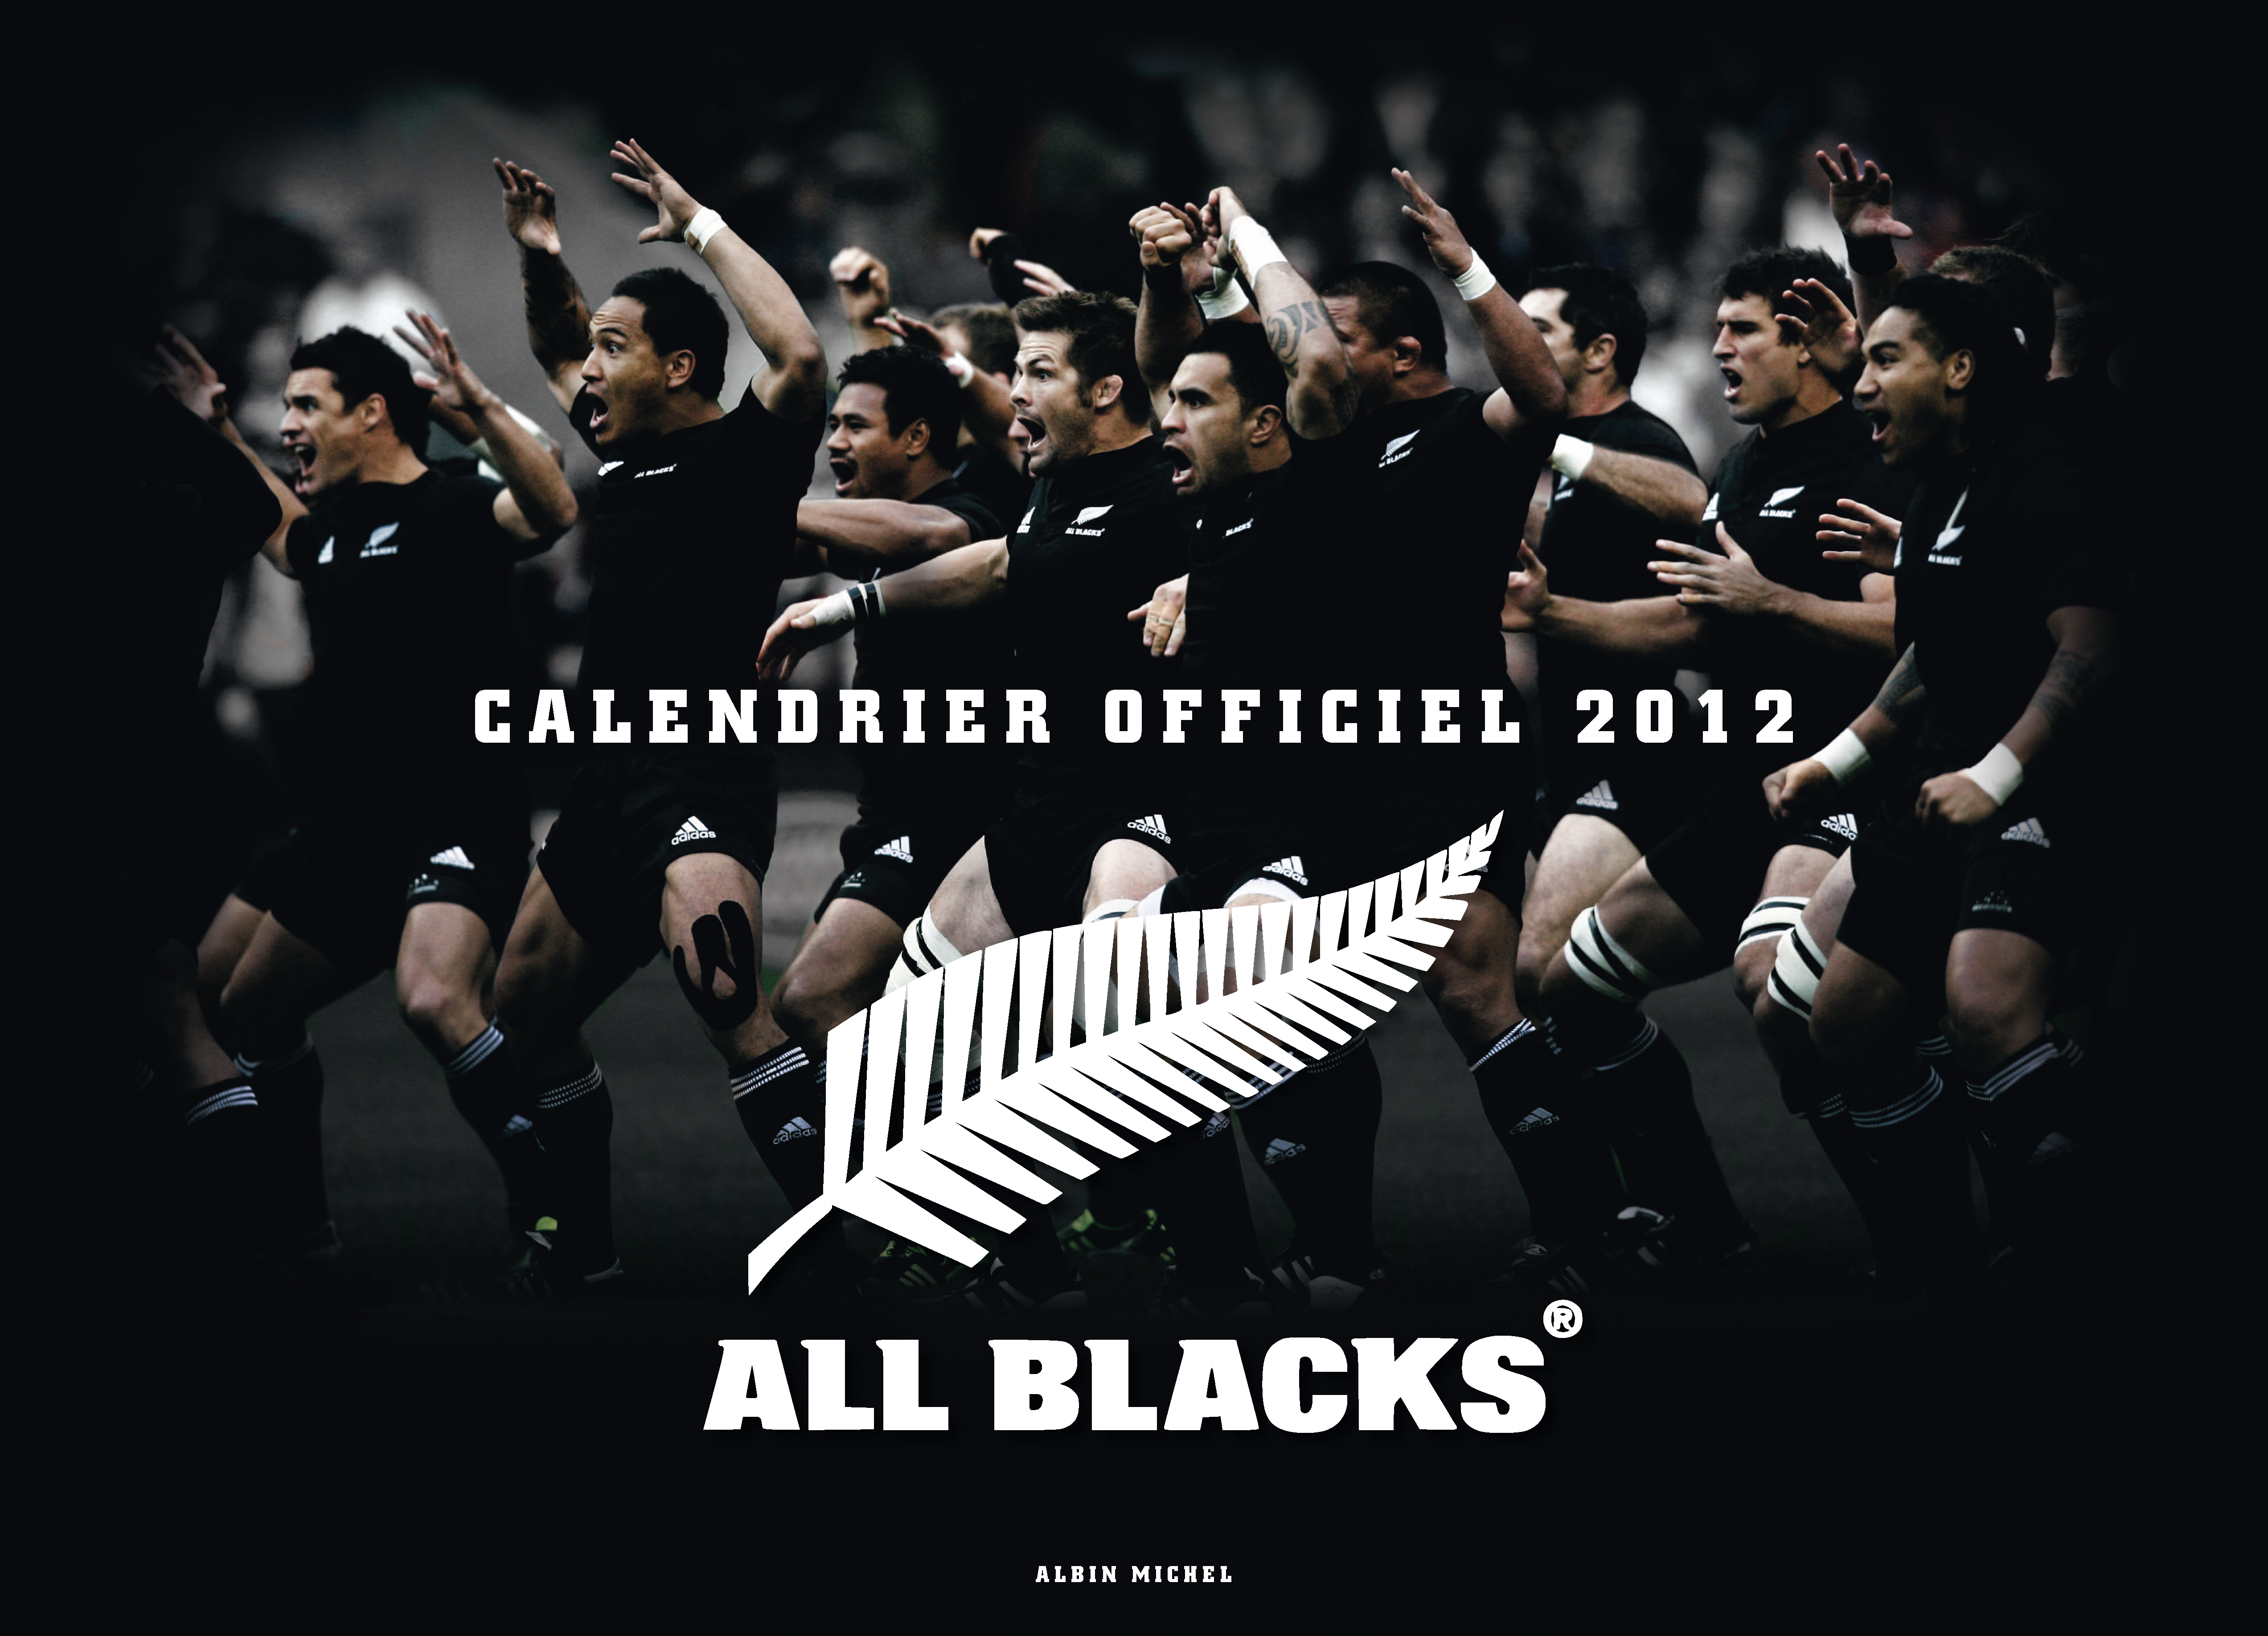 tutta la carta da parati nera di rugby,font,testo,manifesto,copertina,film